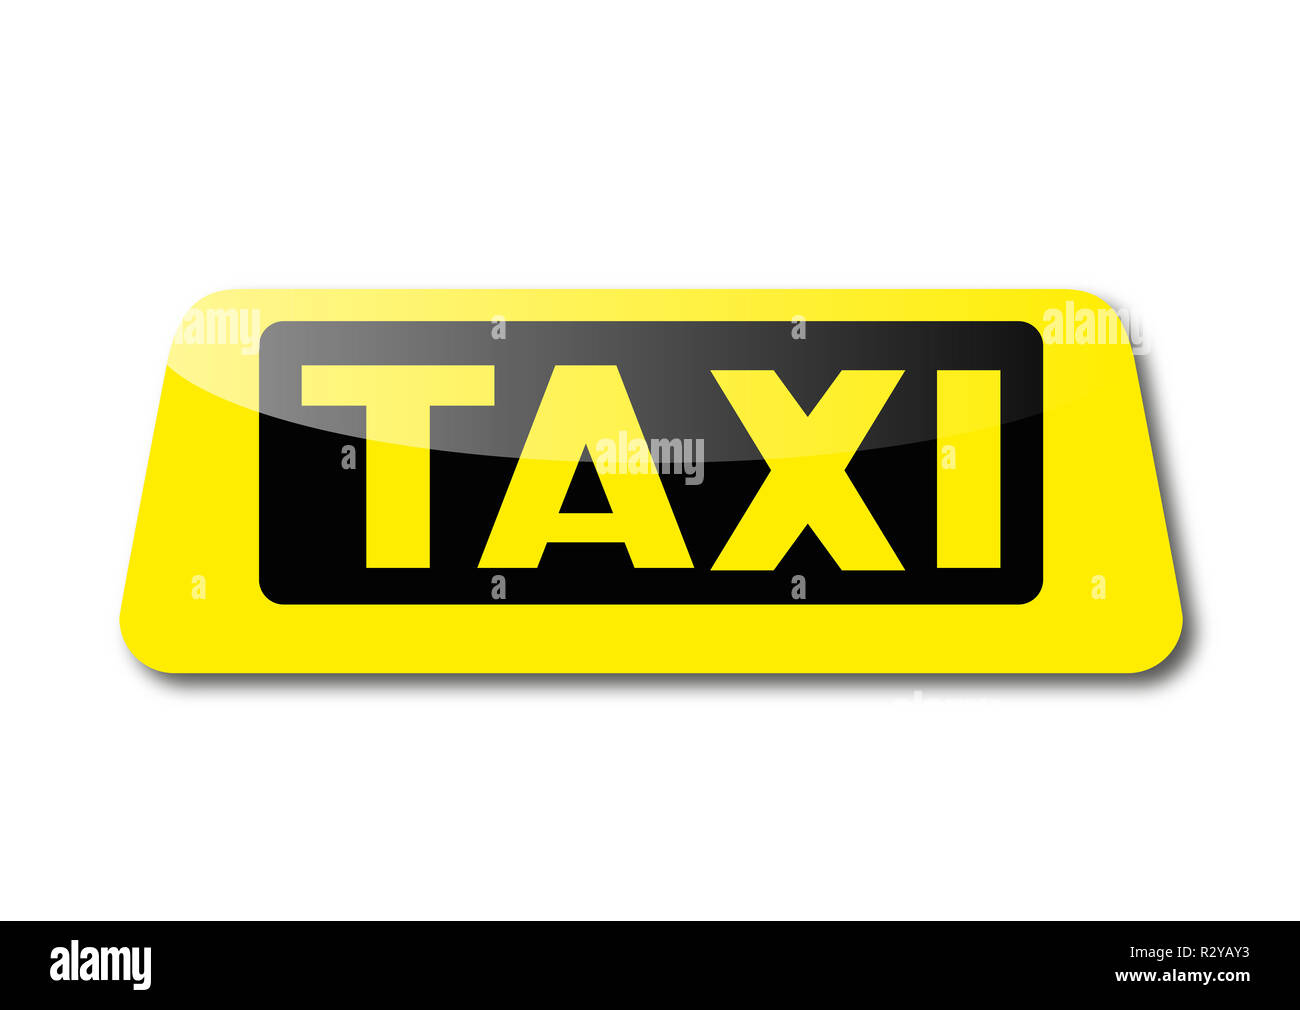 taxi symbol Stock Photo